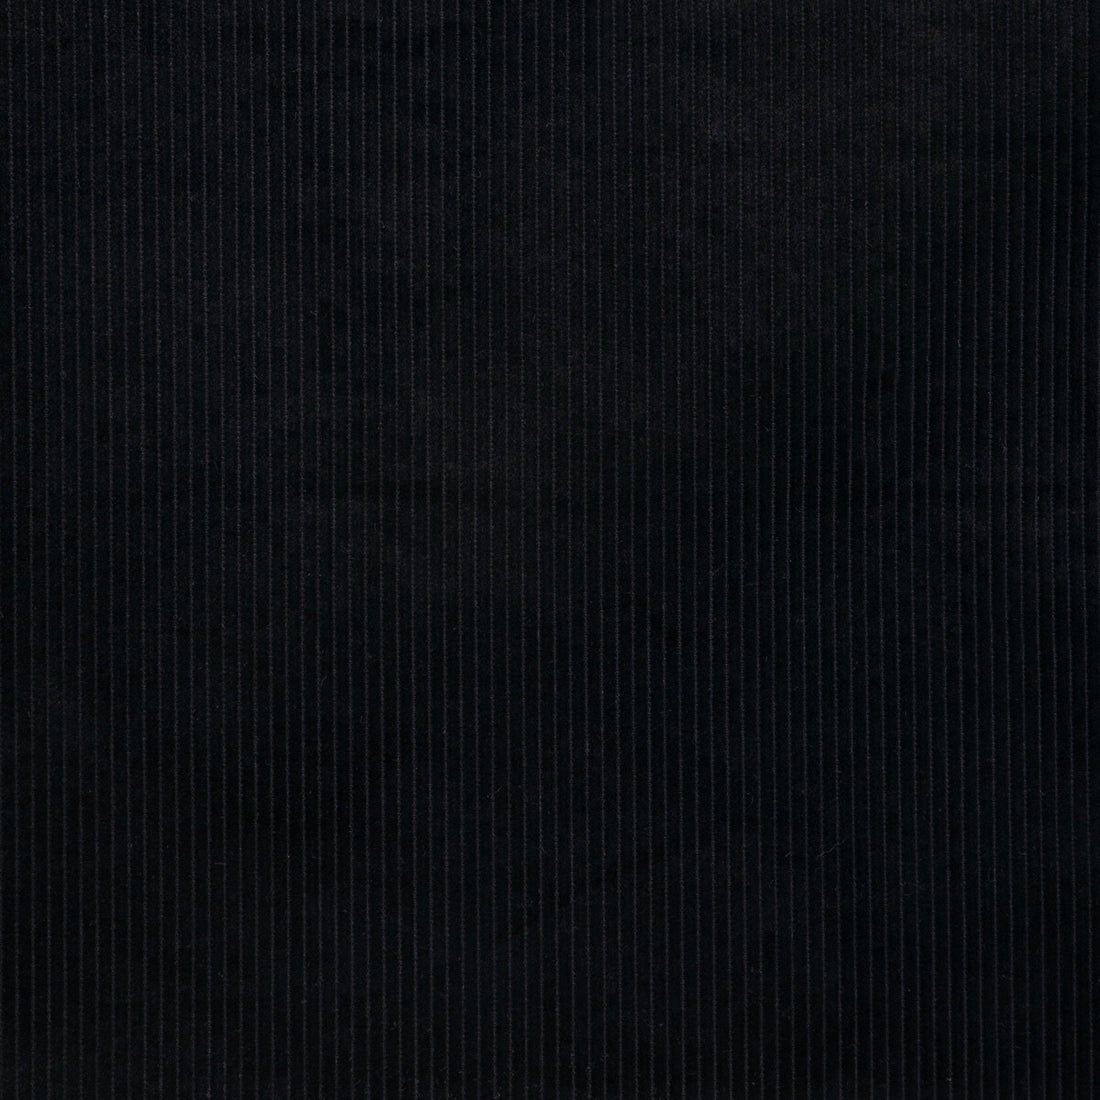 Kravet Smart fabric in 37006-8 color - pattern 37006.8.0 - by Kravet Smart